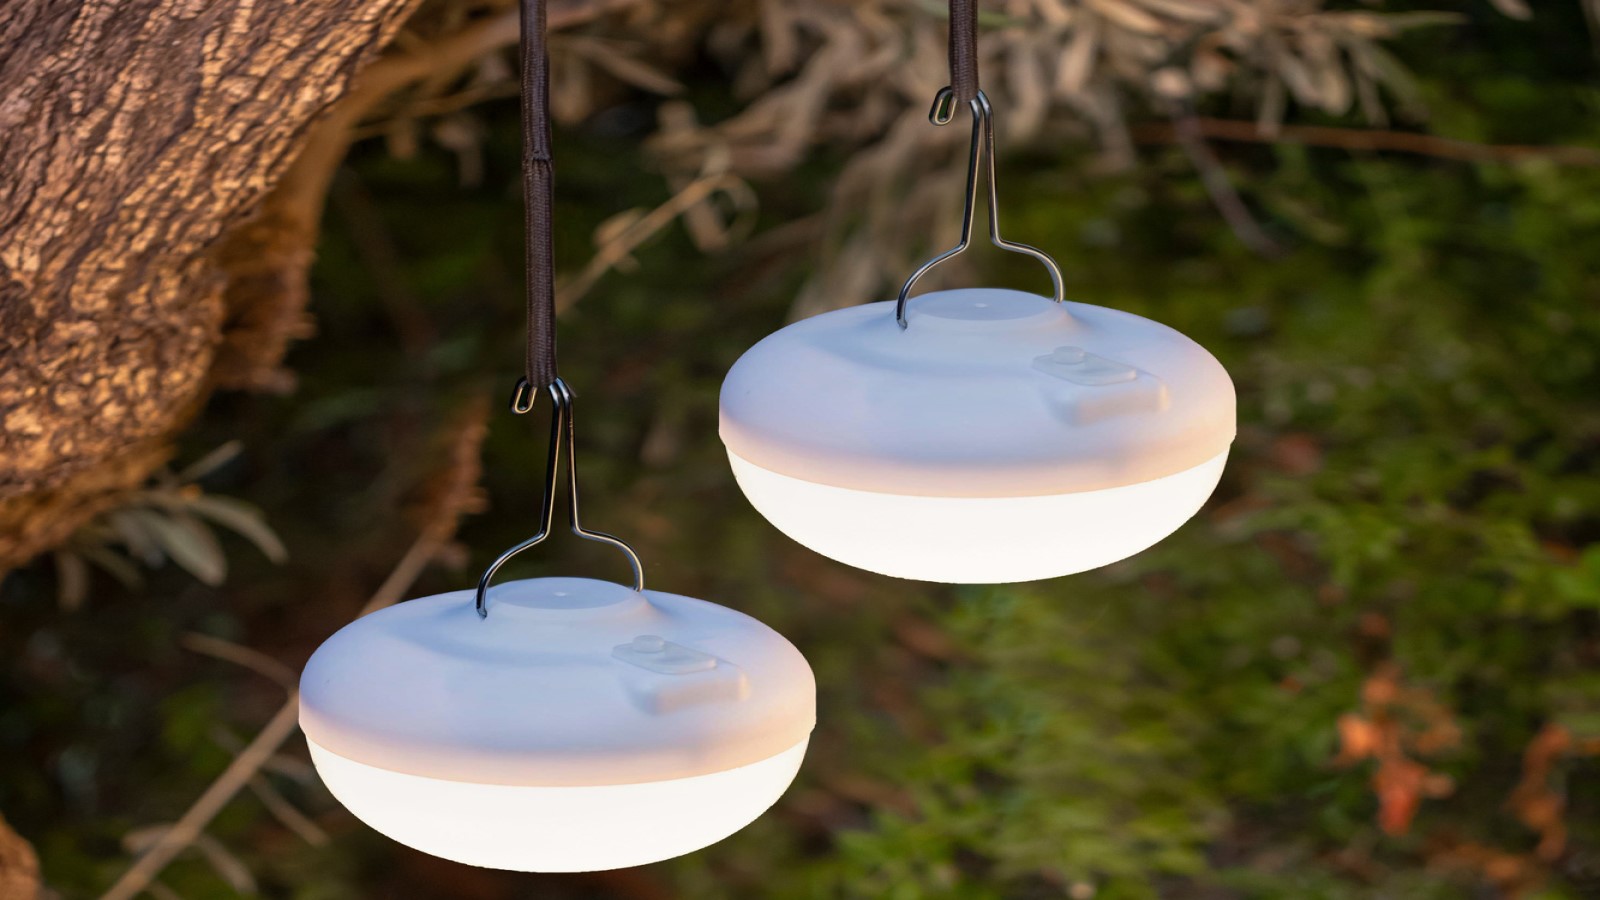 NEWGARDEN Cordless LED Ambiance Light Cherry 900-Lumens: Magnetic Base